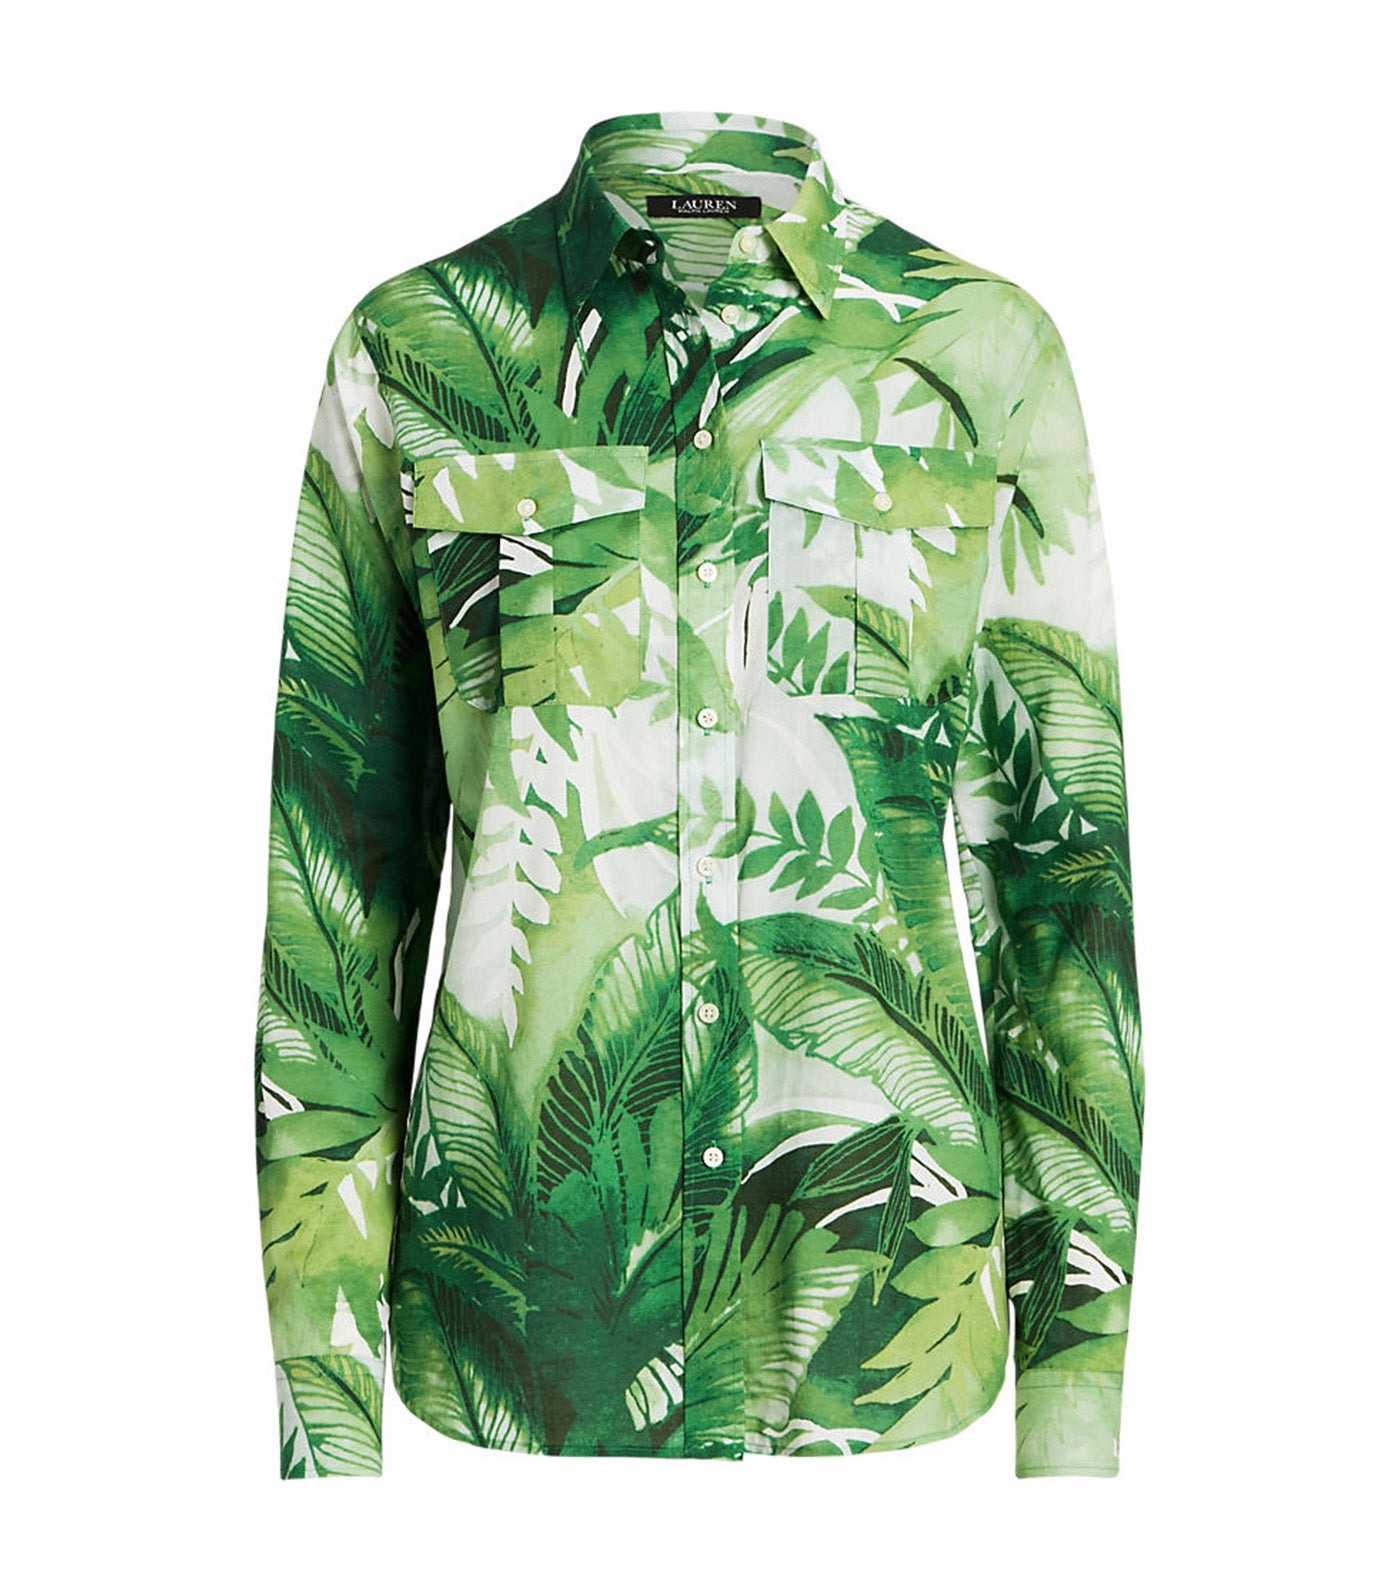 Women's Palm Frond-Print Cotton Voile Shirt Green Multi